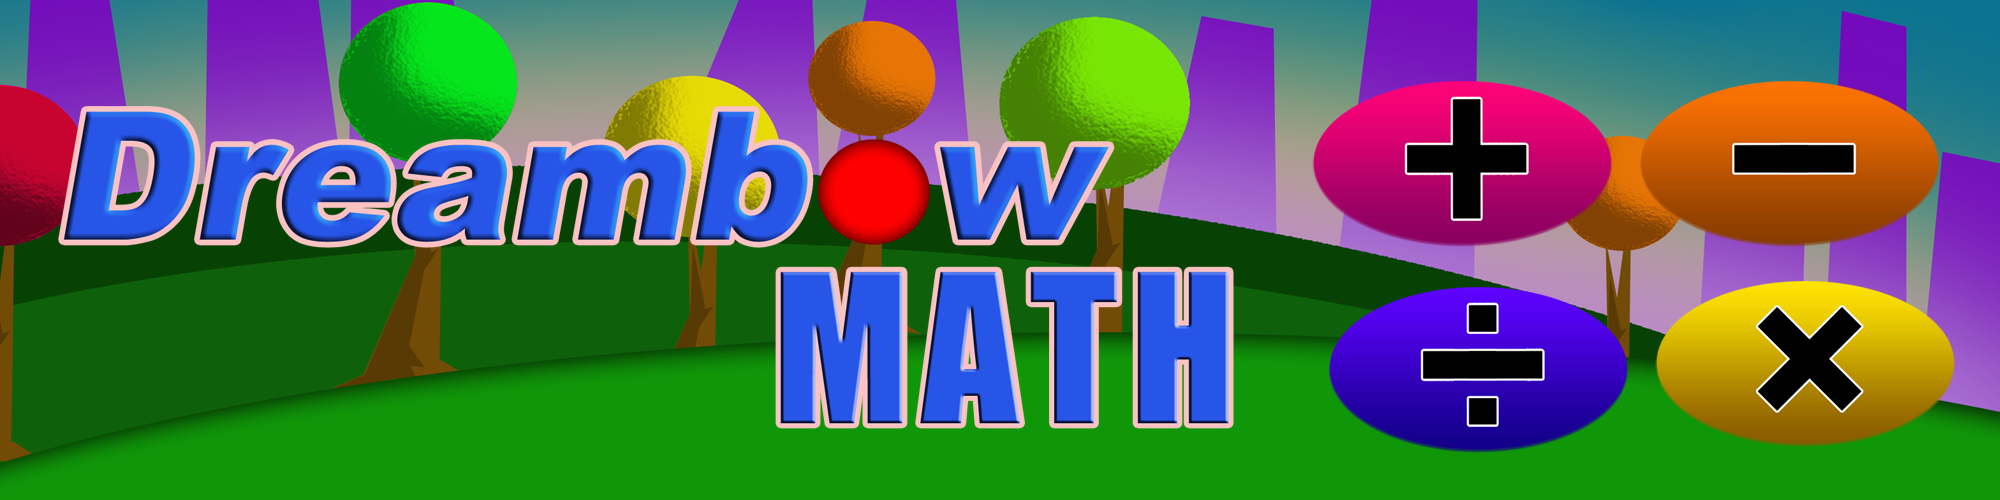 Dreambow Math